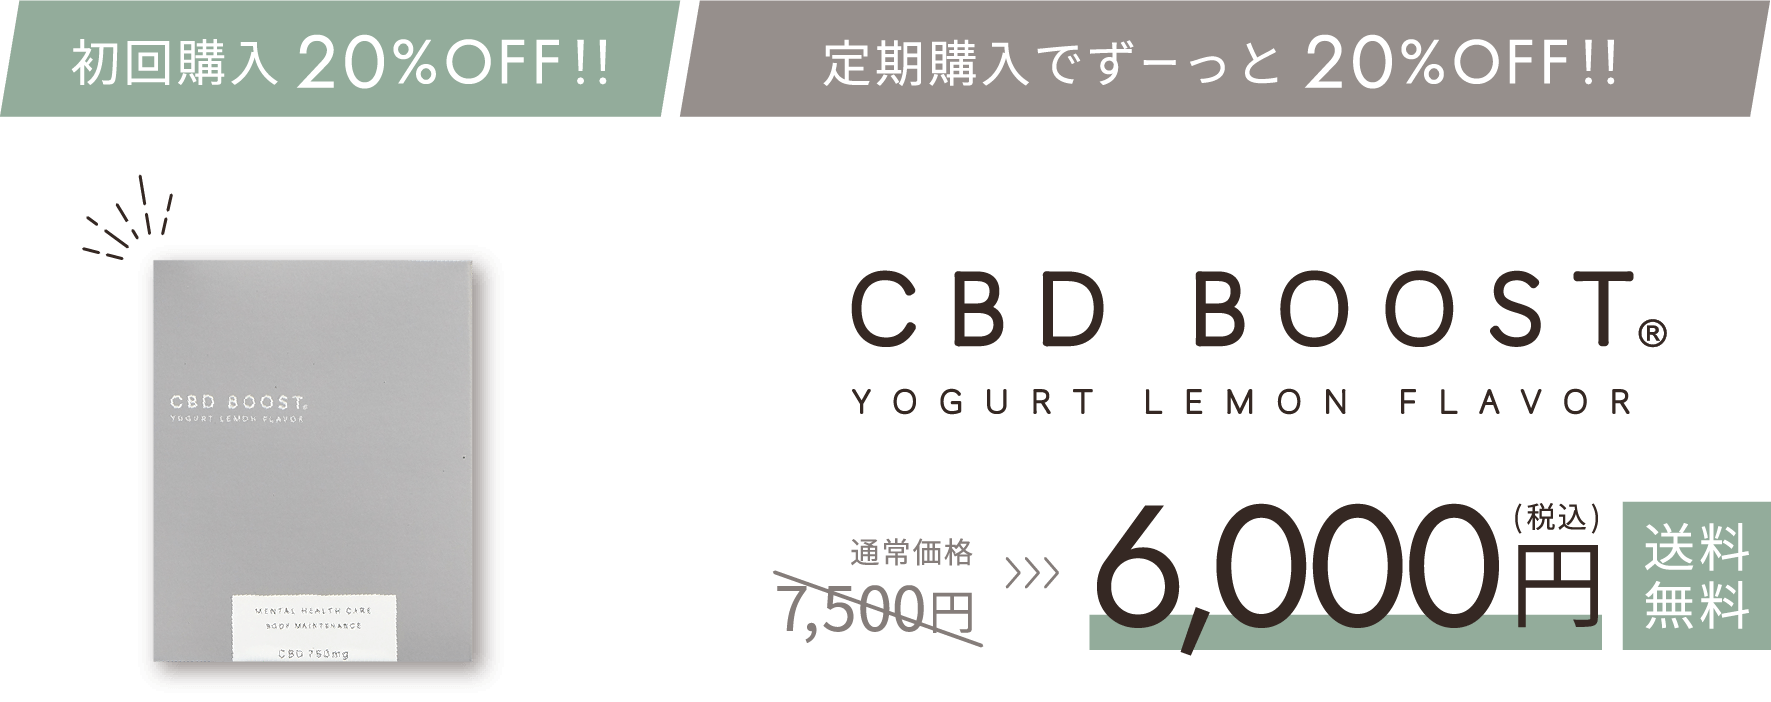 CBD BOOST 6000円